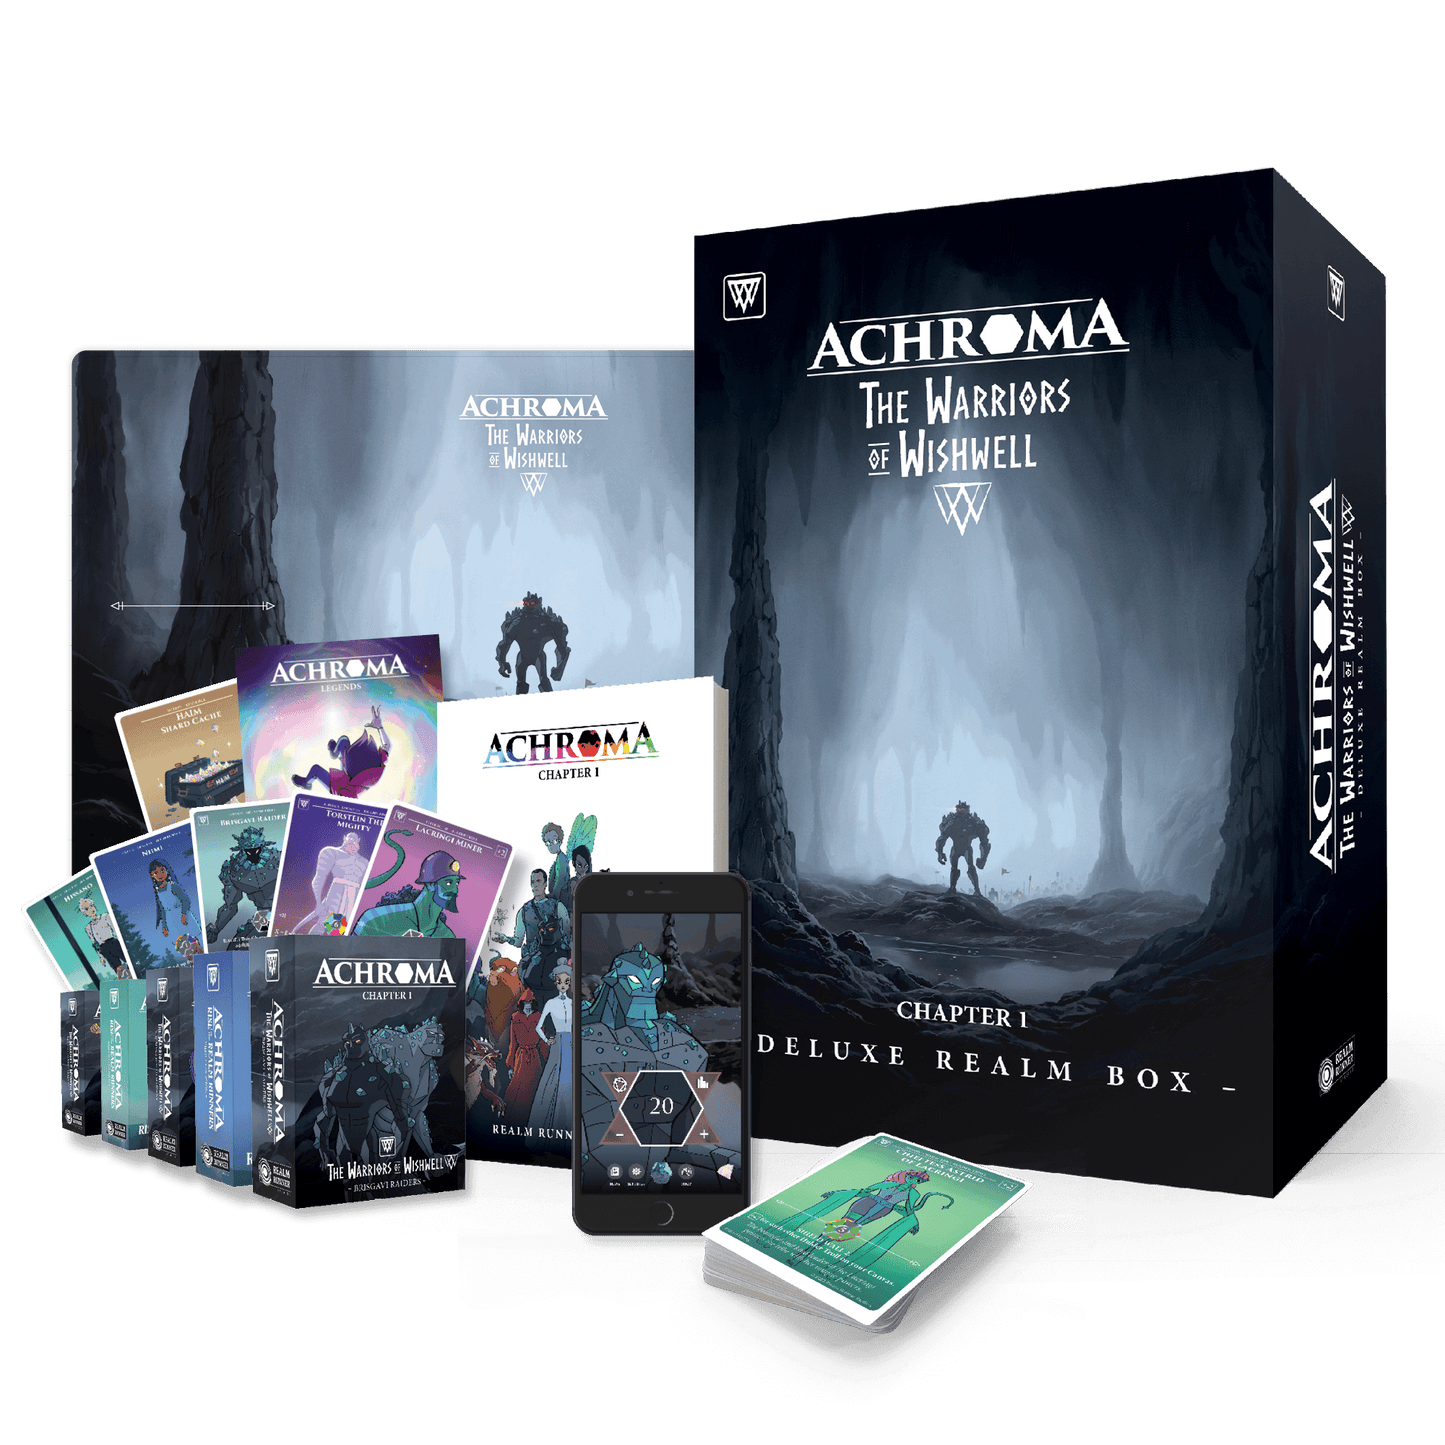 Achroma Deluxe Realm Box